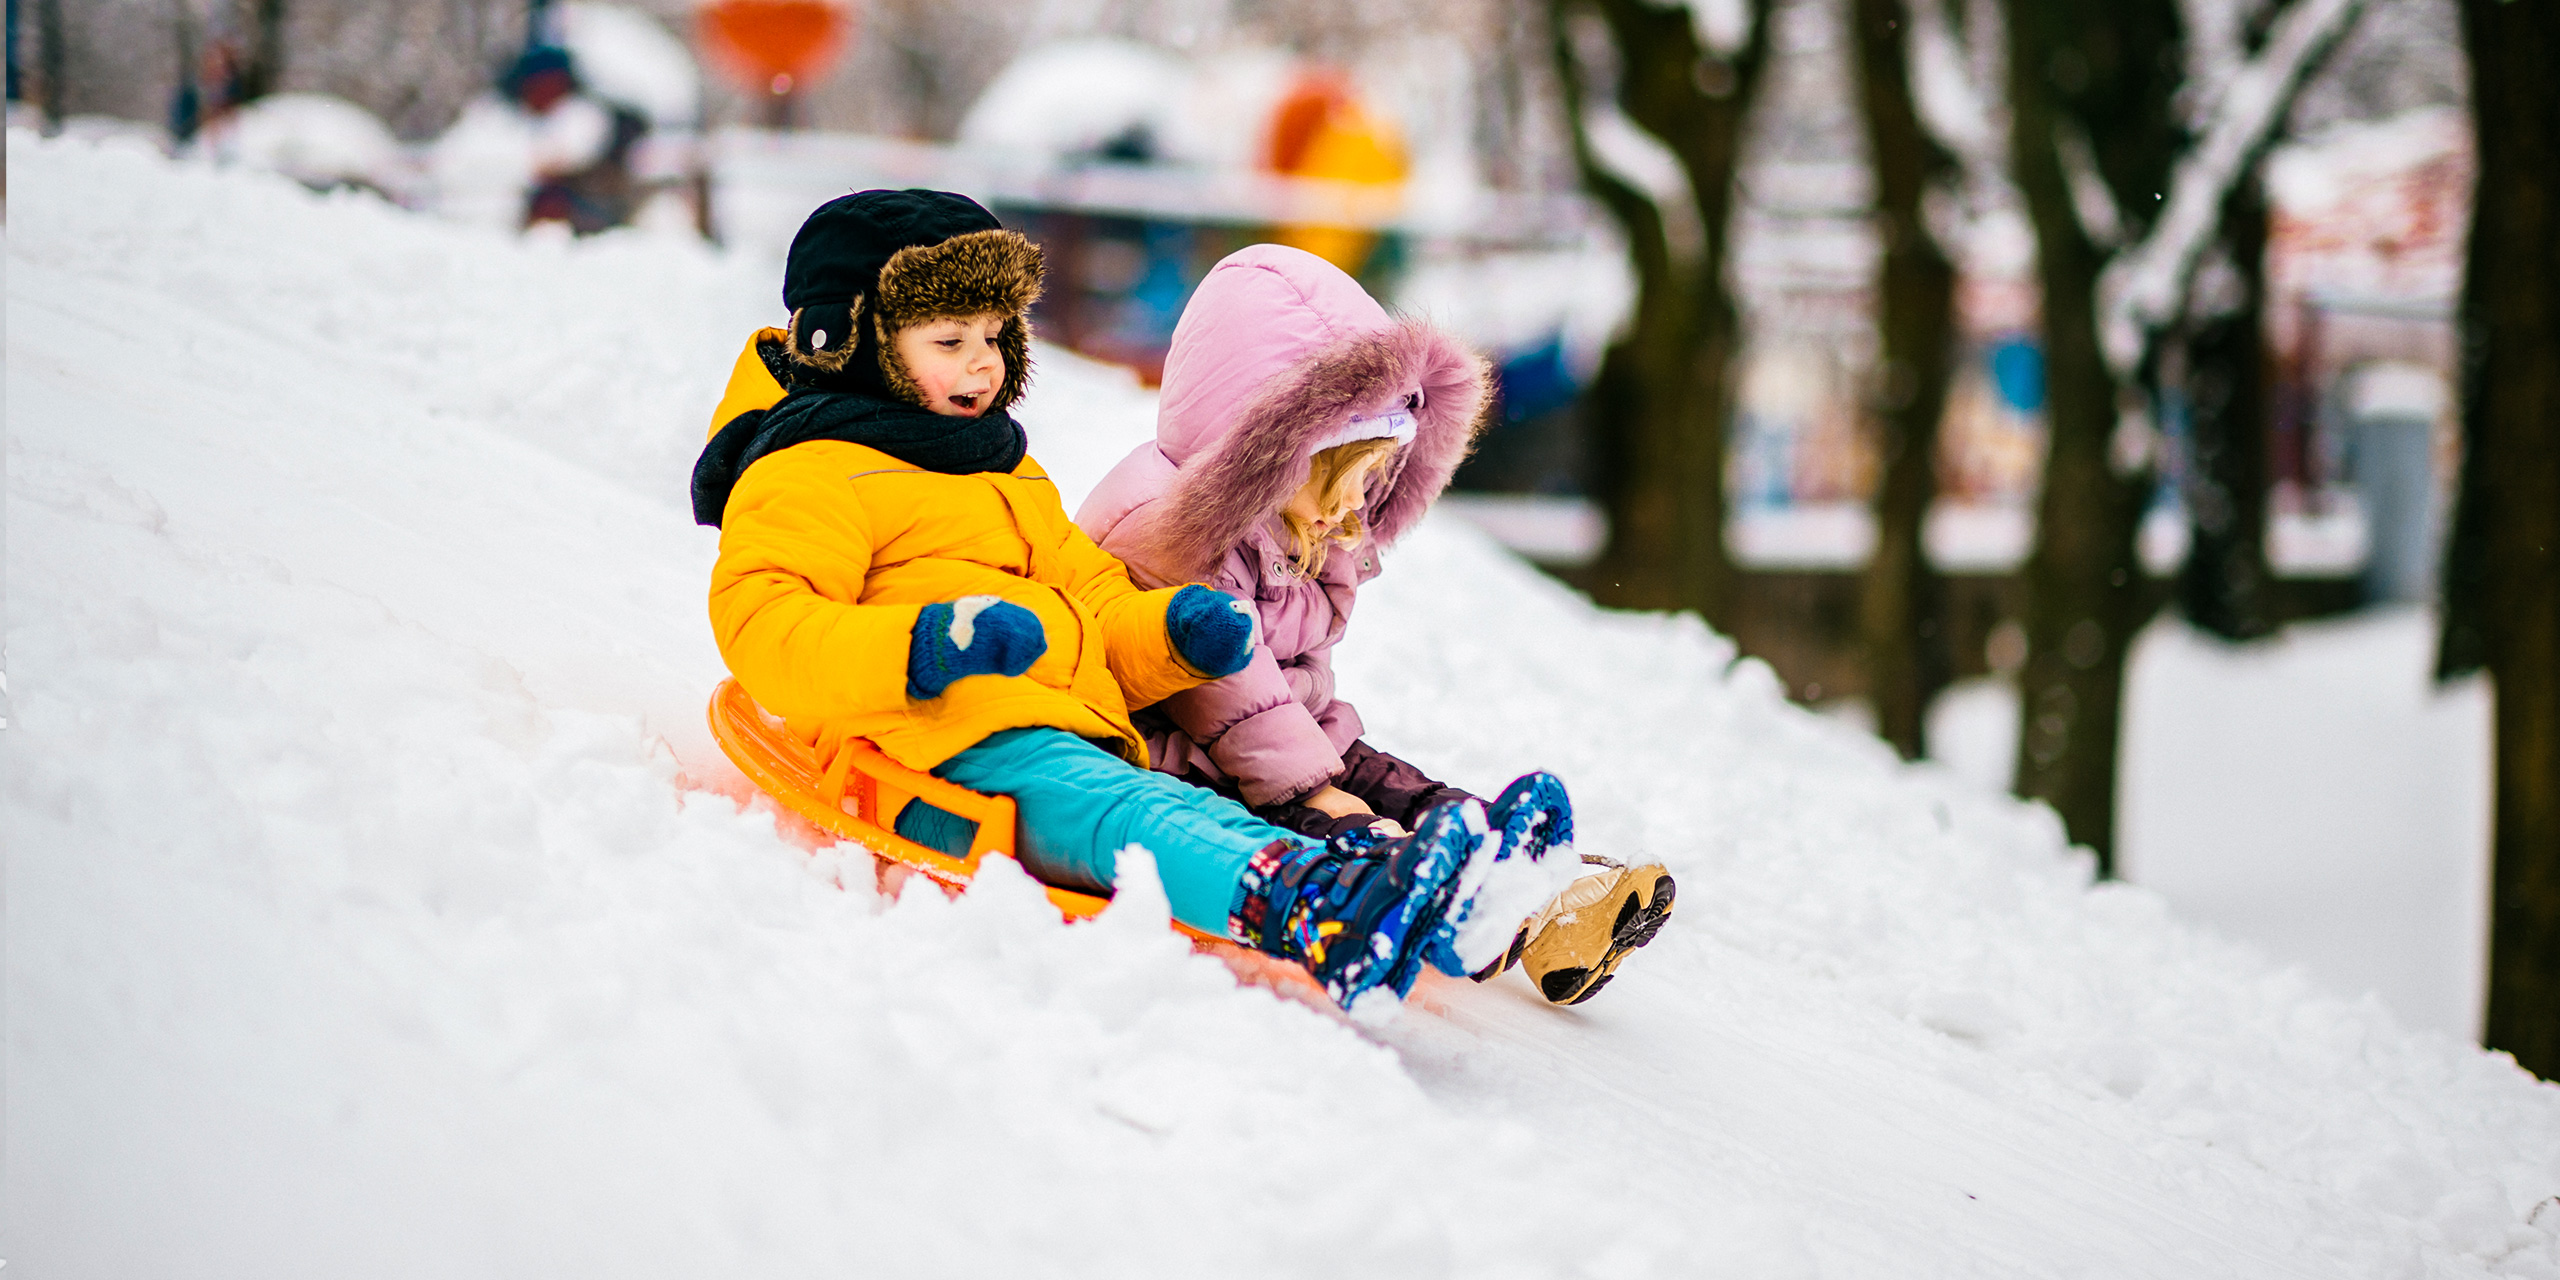 Two small cheerful children ride Board on snow hill;Courtesy of Benevolente82/Shutterstock